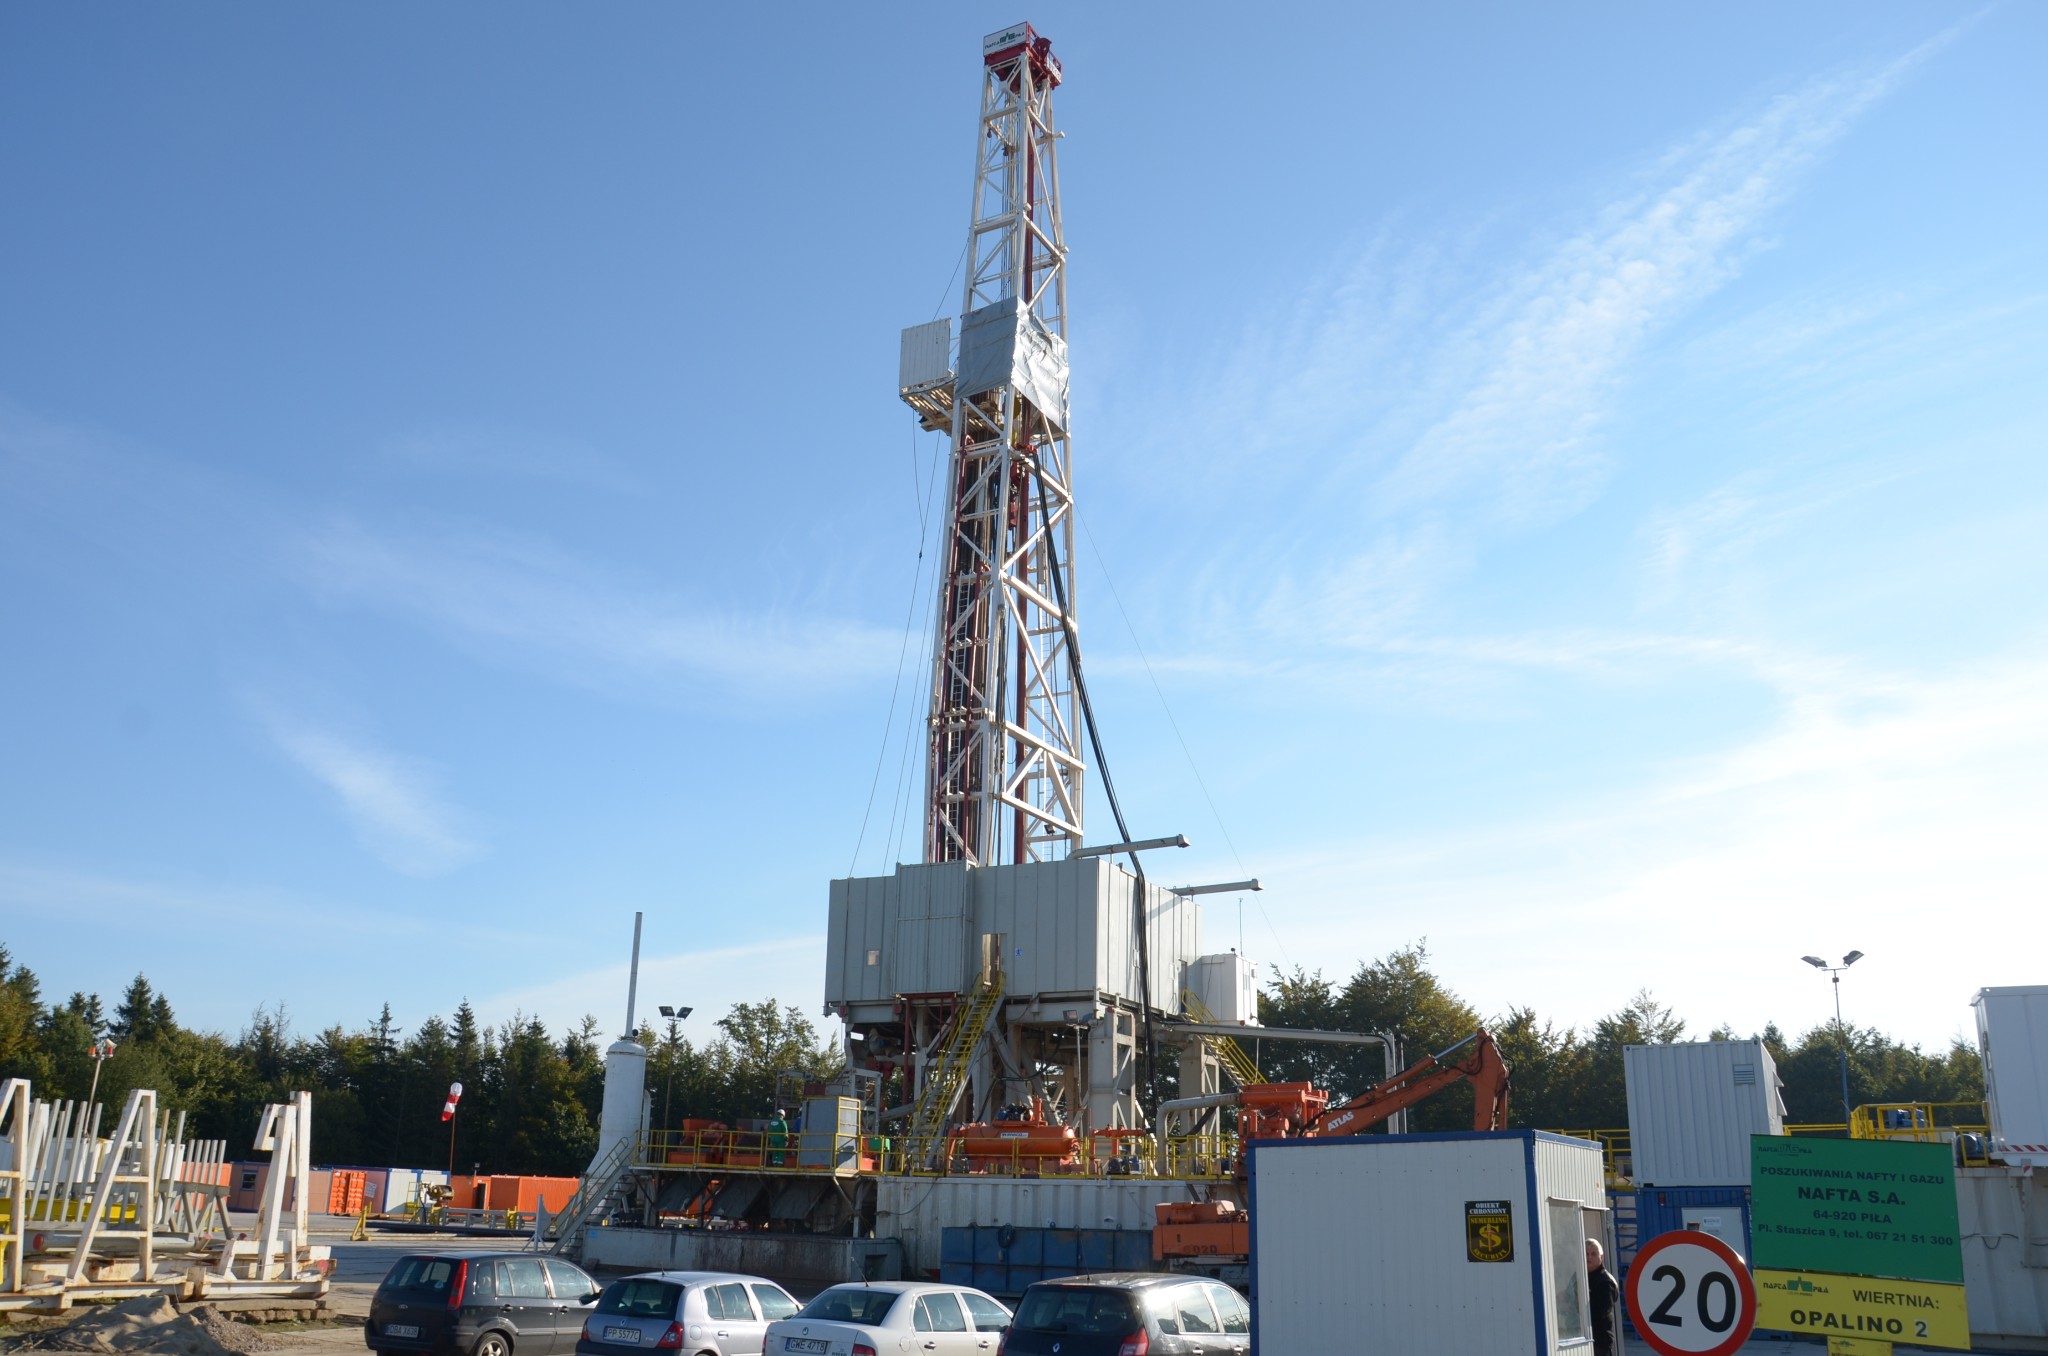 Shale gas drilling pad in northern Poland. (Image: Dimiter Kenarov)